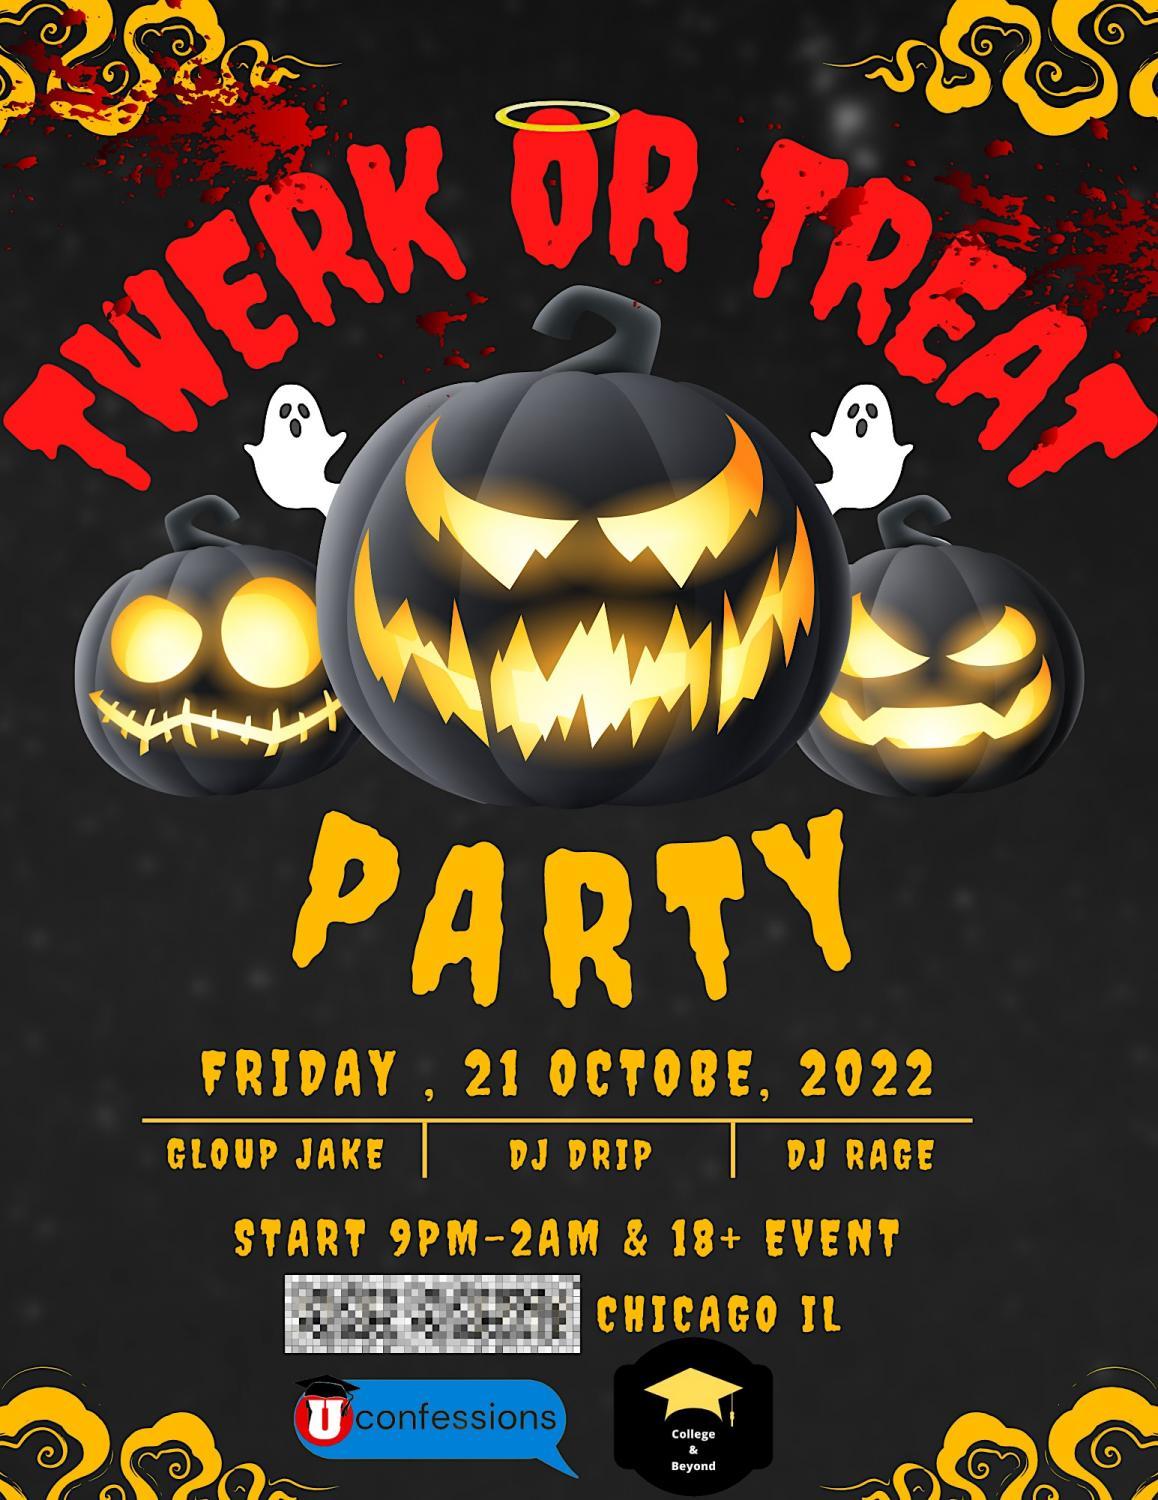 TWERK OR TREAT - Chicago's BIGGEST Halloween Party
Fri Oct 21, 9:00 PM - Sat Oct 22, 2:00 AM